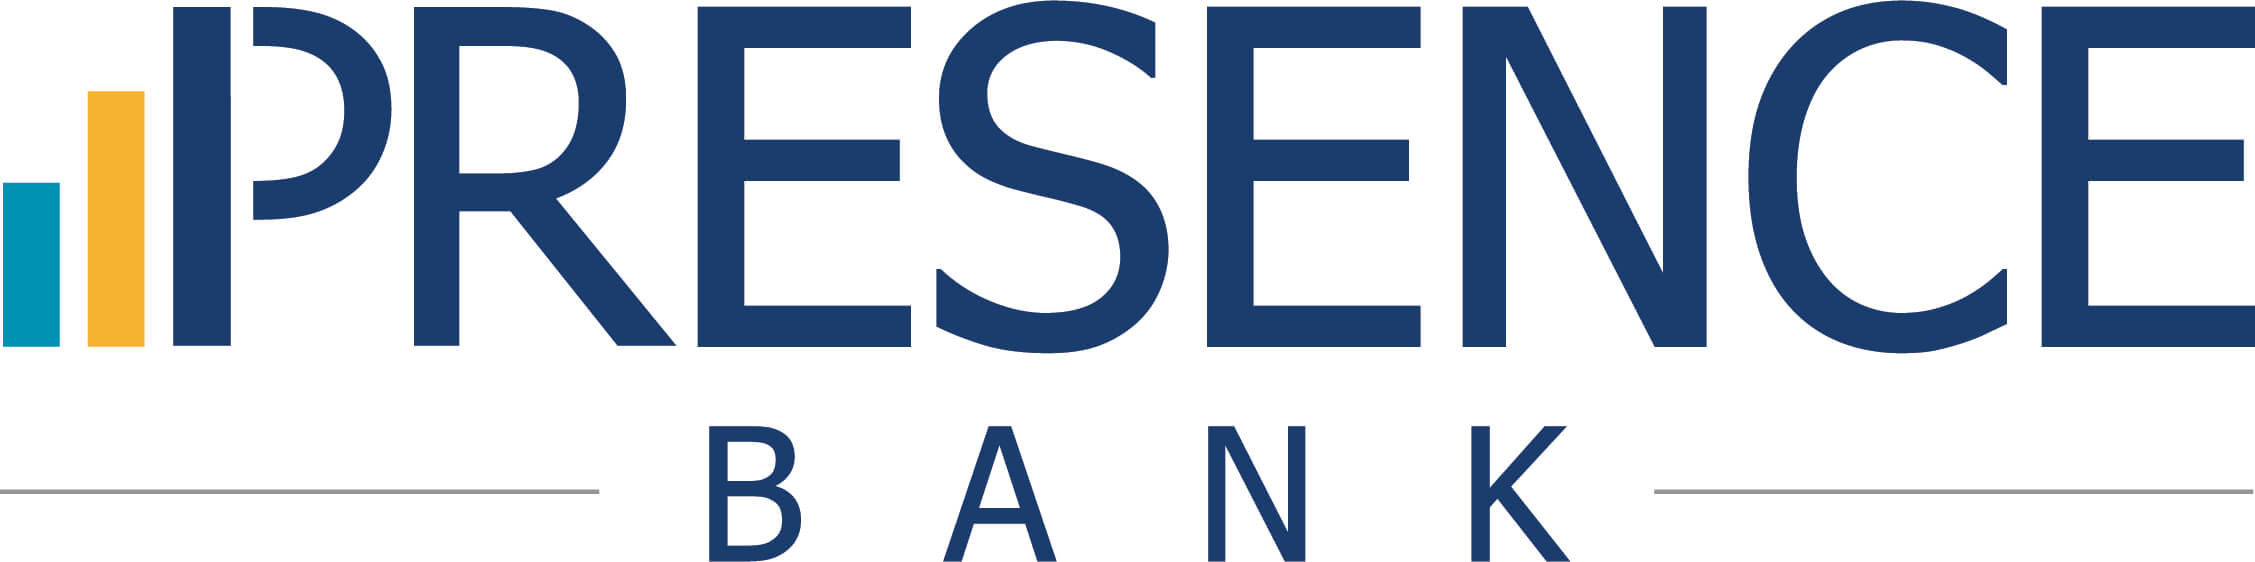 Presence Bank logo